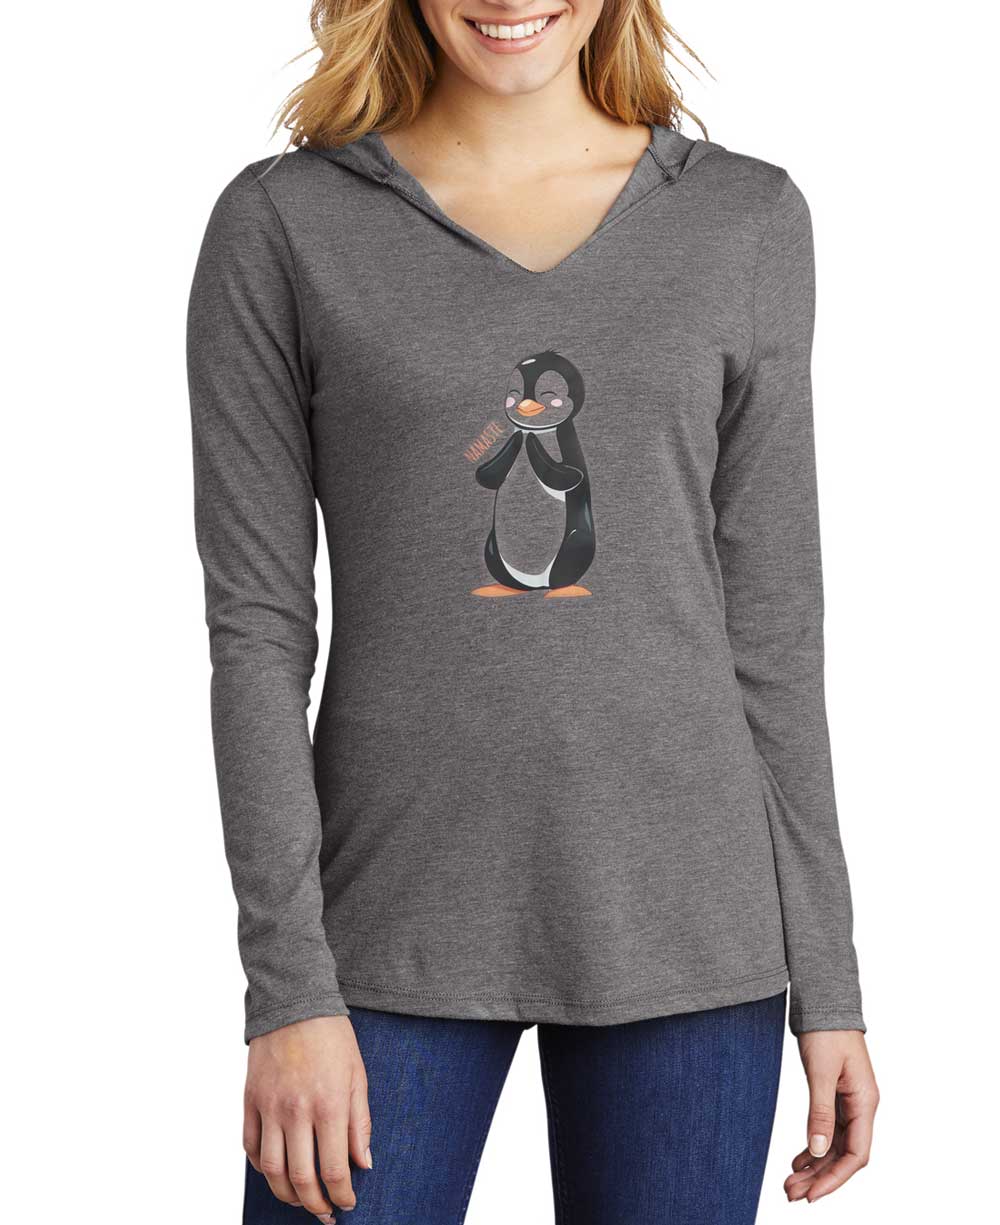 Namaste Penguin Long Sleeve Lightweight Hooded Tee - Shirts & Tops S